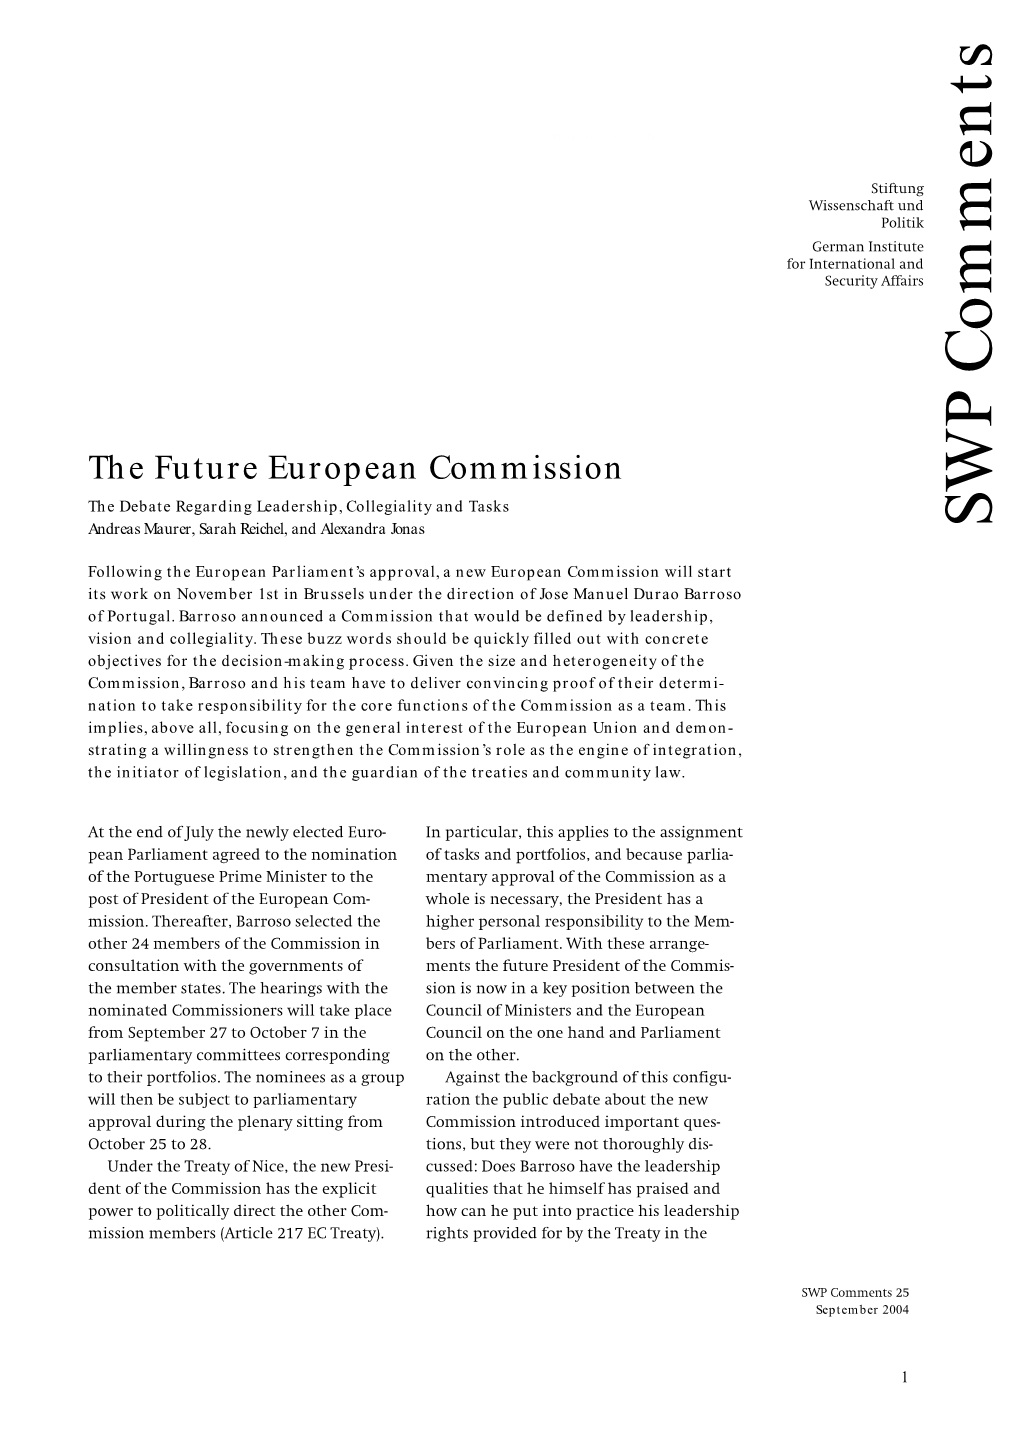 The Future European Commission the Debate Regarding Leadership, Collegiality and Tasks